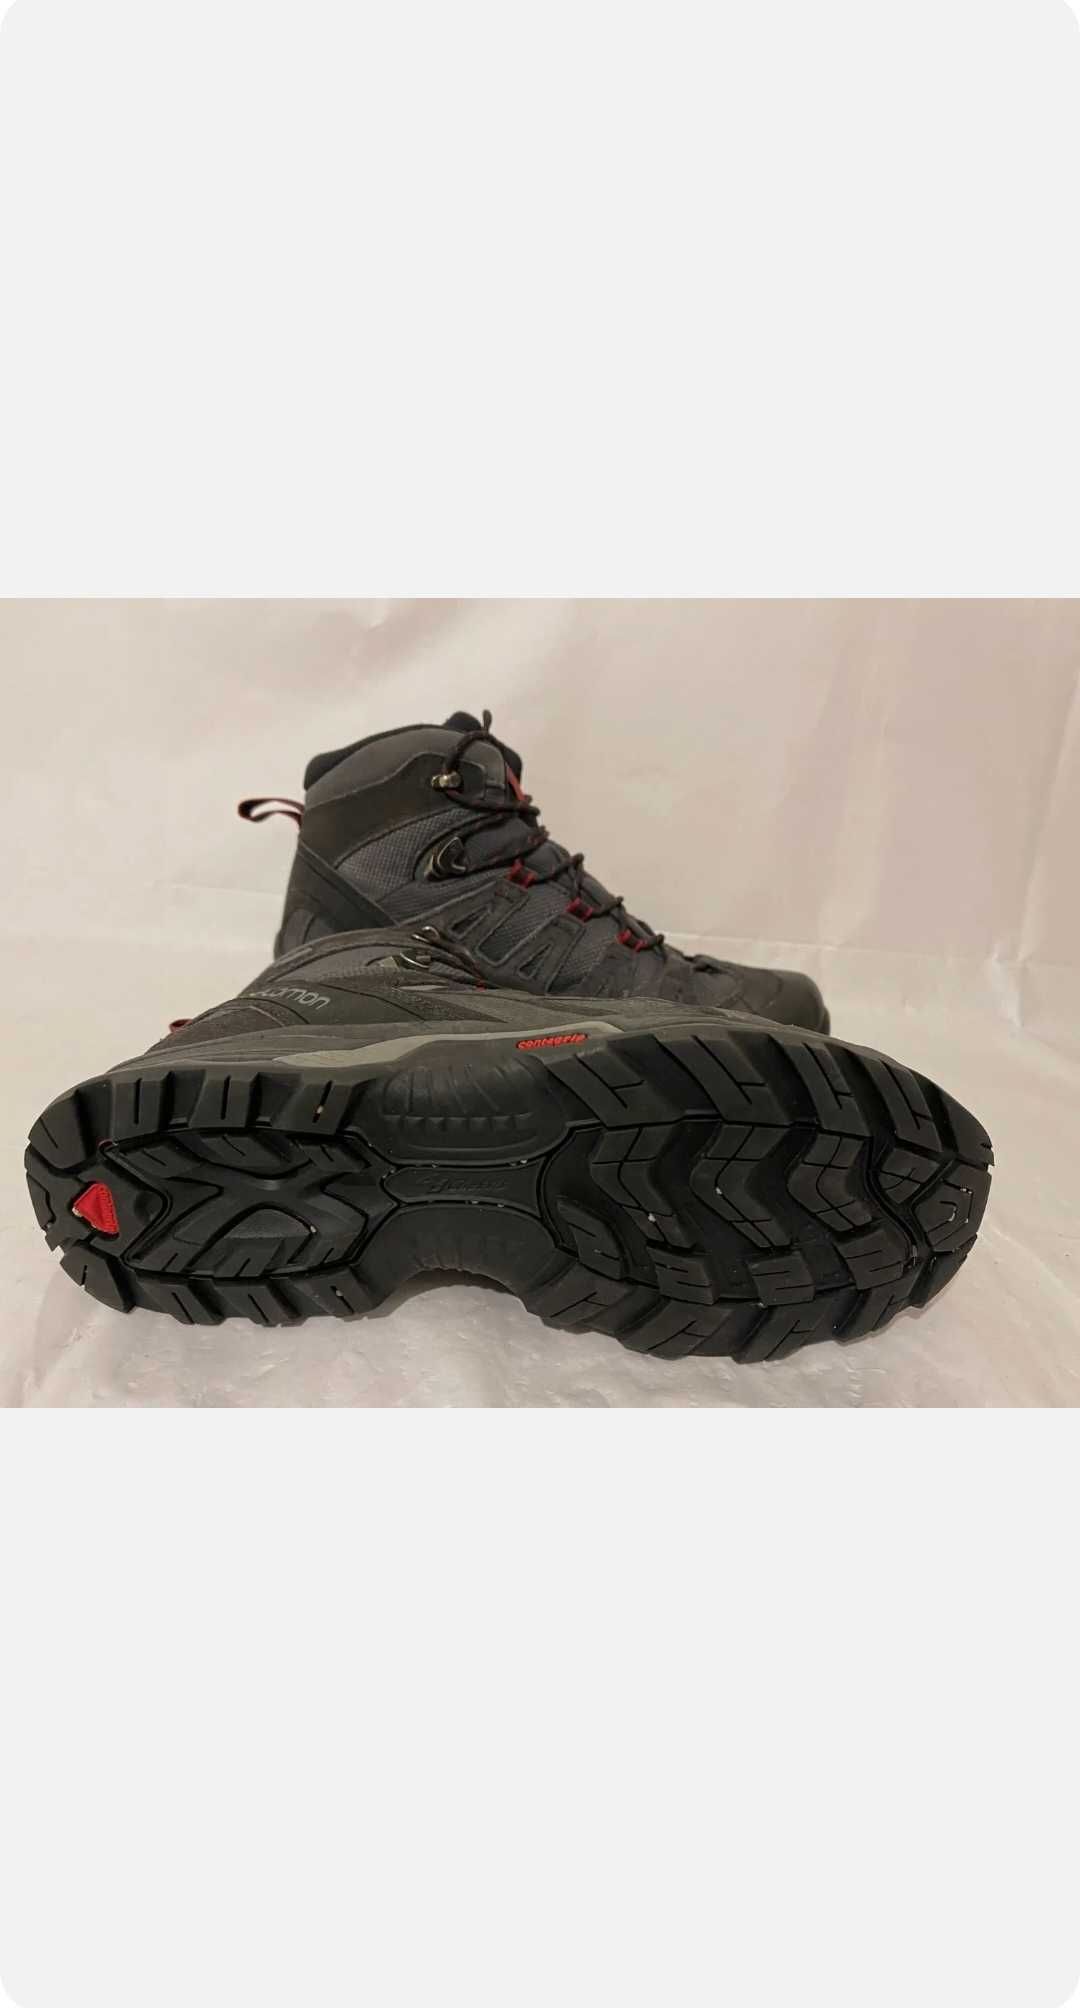 Планински обувки Salomon mens quest prime GTX, размер UK 9, EU 43⅓